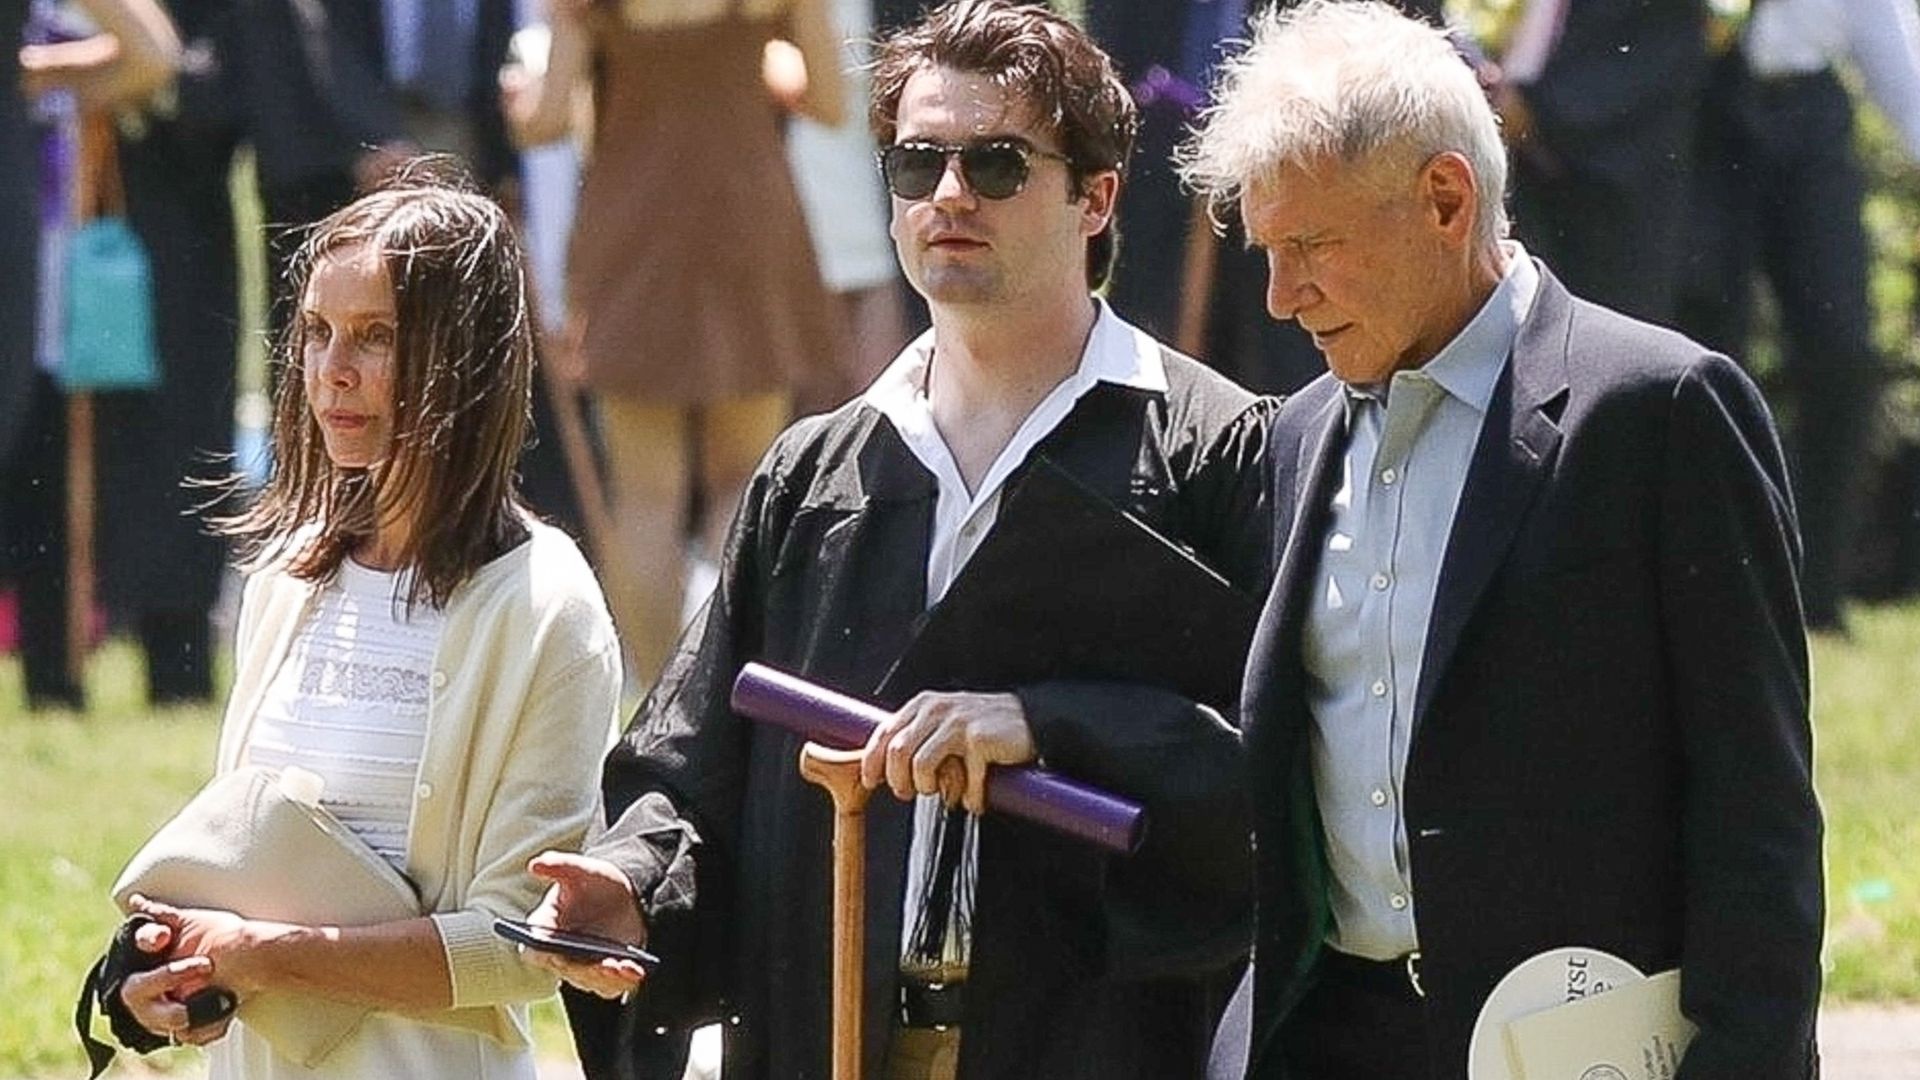 Proud parents Harrison Ford and Calista Flockhart attend their son Liam Flockhart's graduation




